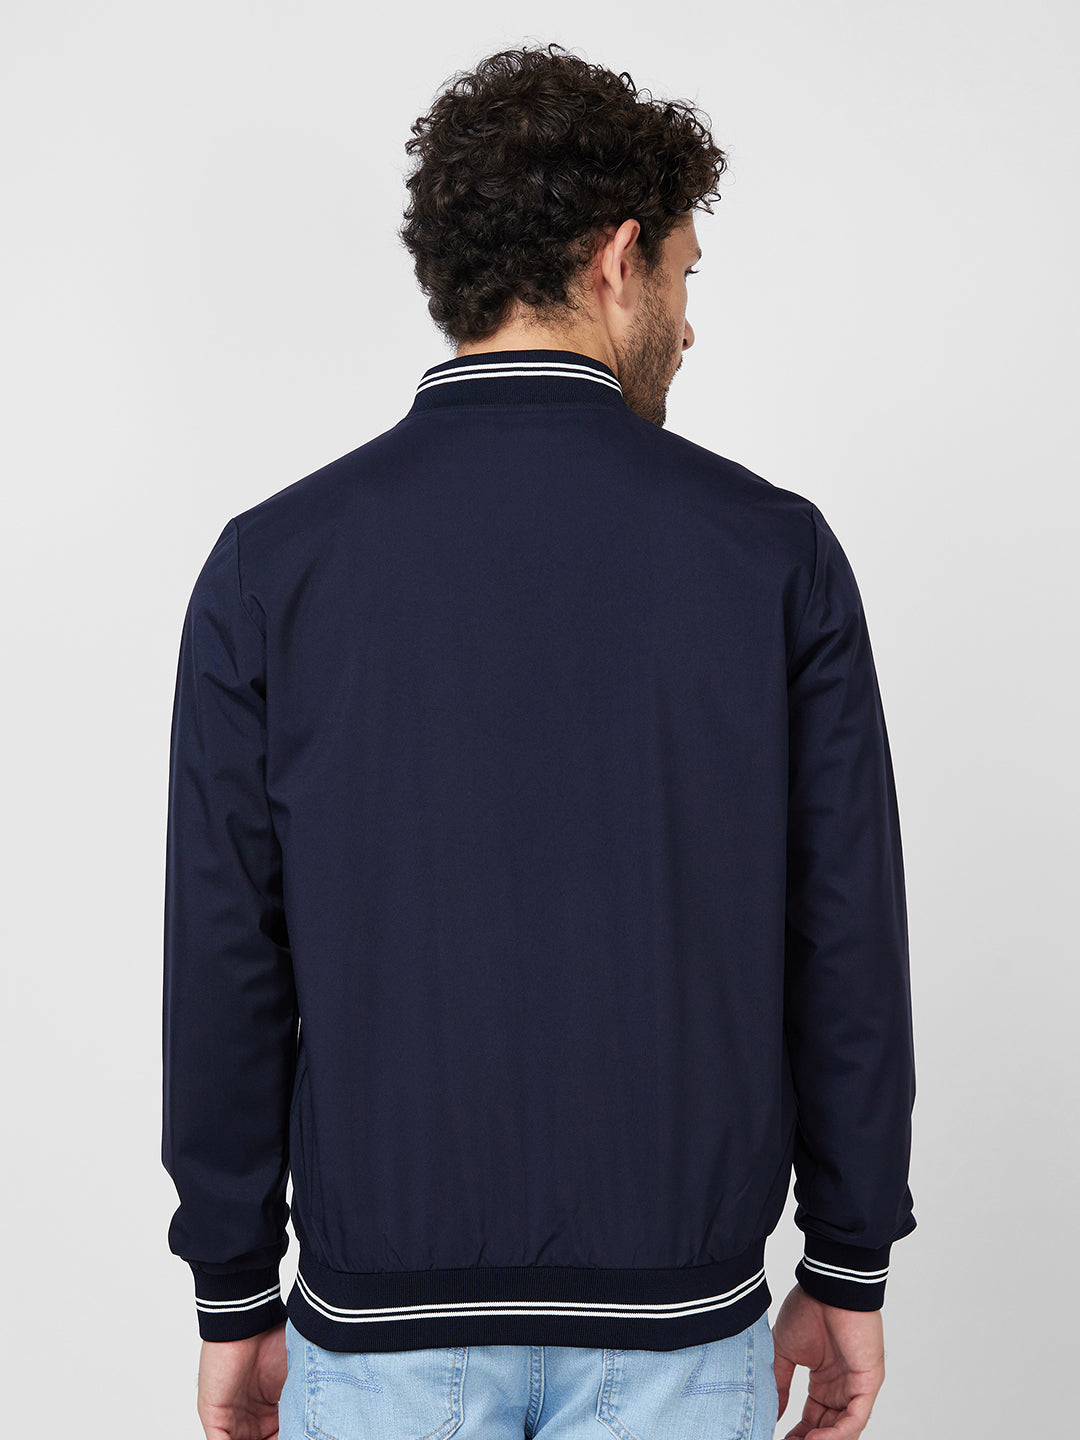 Spykar Straight Fit Classic Collar Full Sleeve Blue Jacket For Men